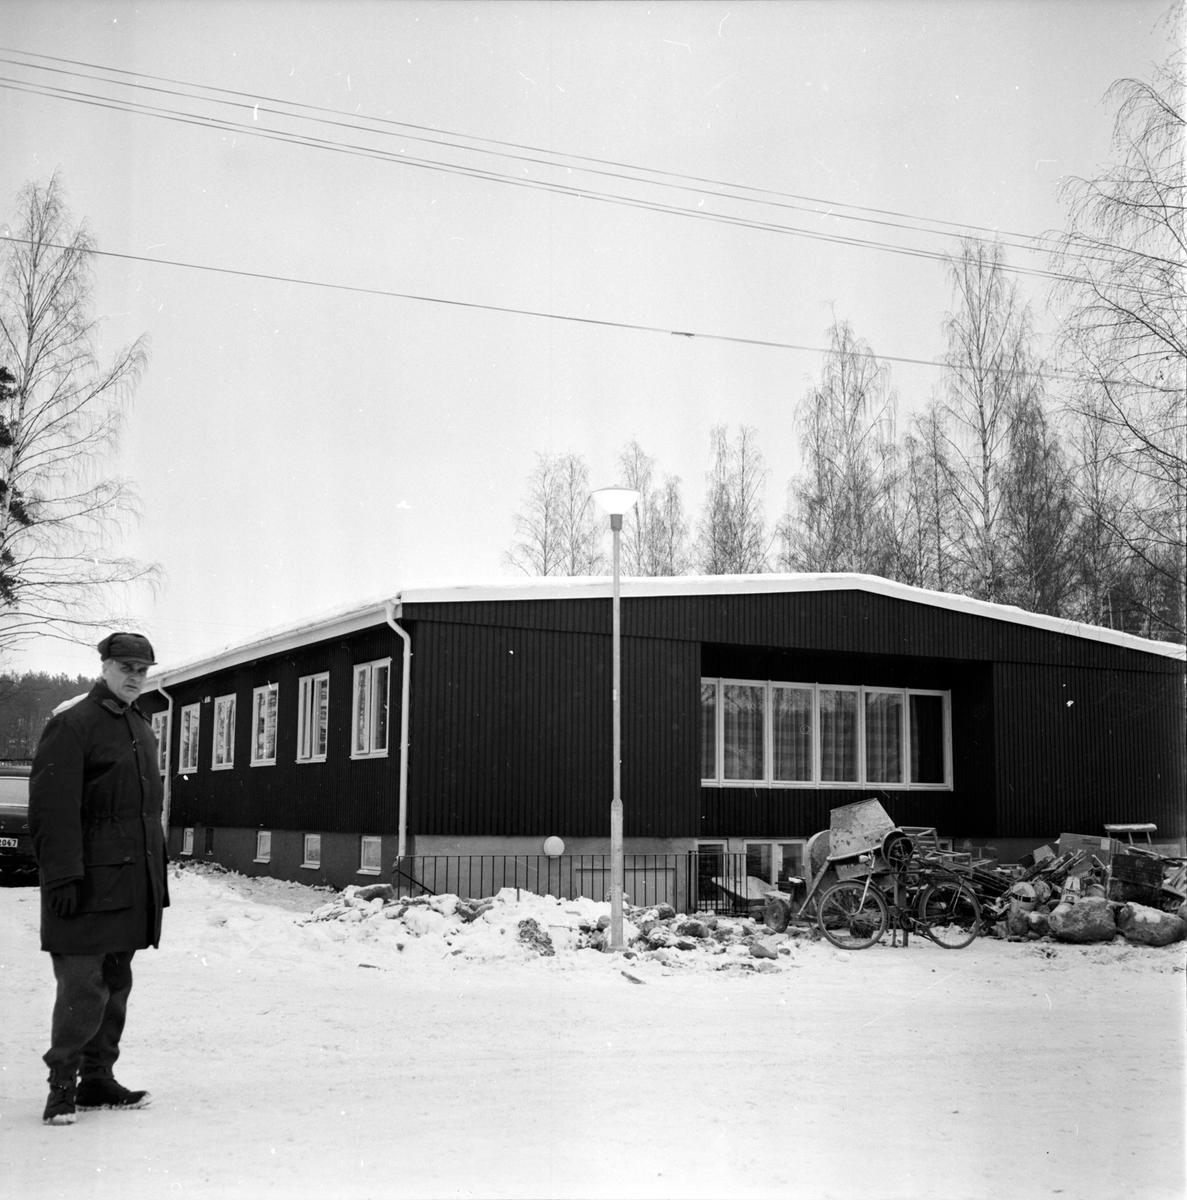 Stagården, Nygården,
Ankarcrona, Westerlund,
17 Februari 1967